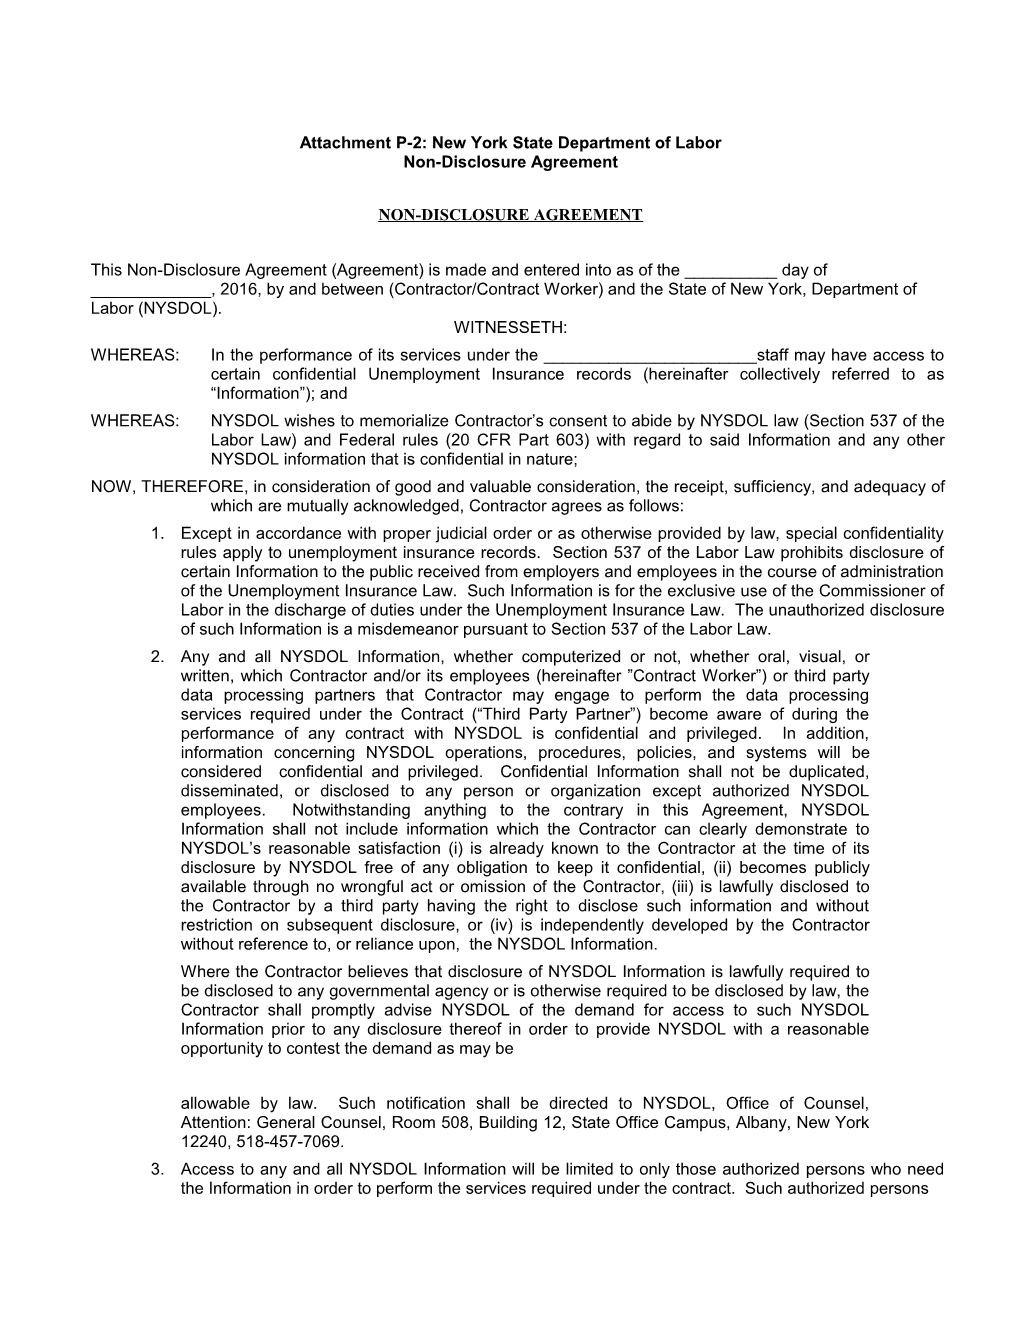 Attachment P-2: New York State Department of Labor Non-Disclosure Agreement